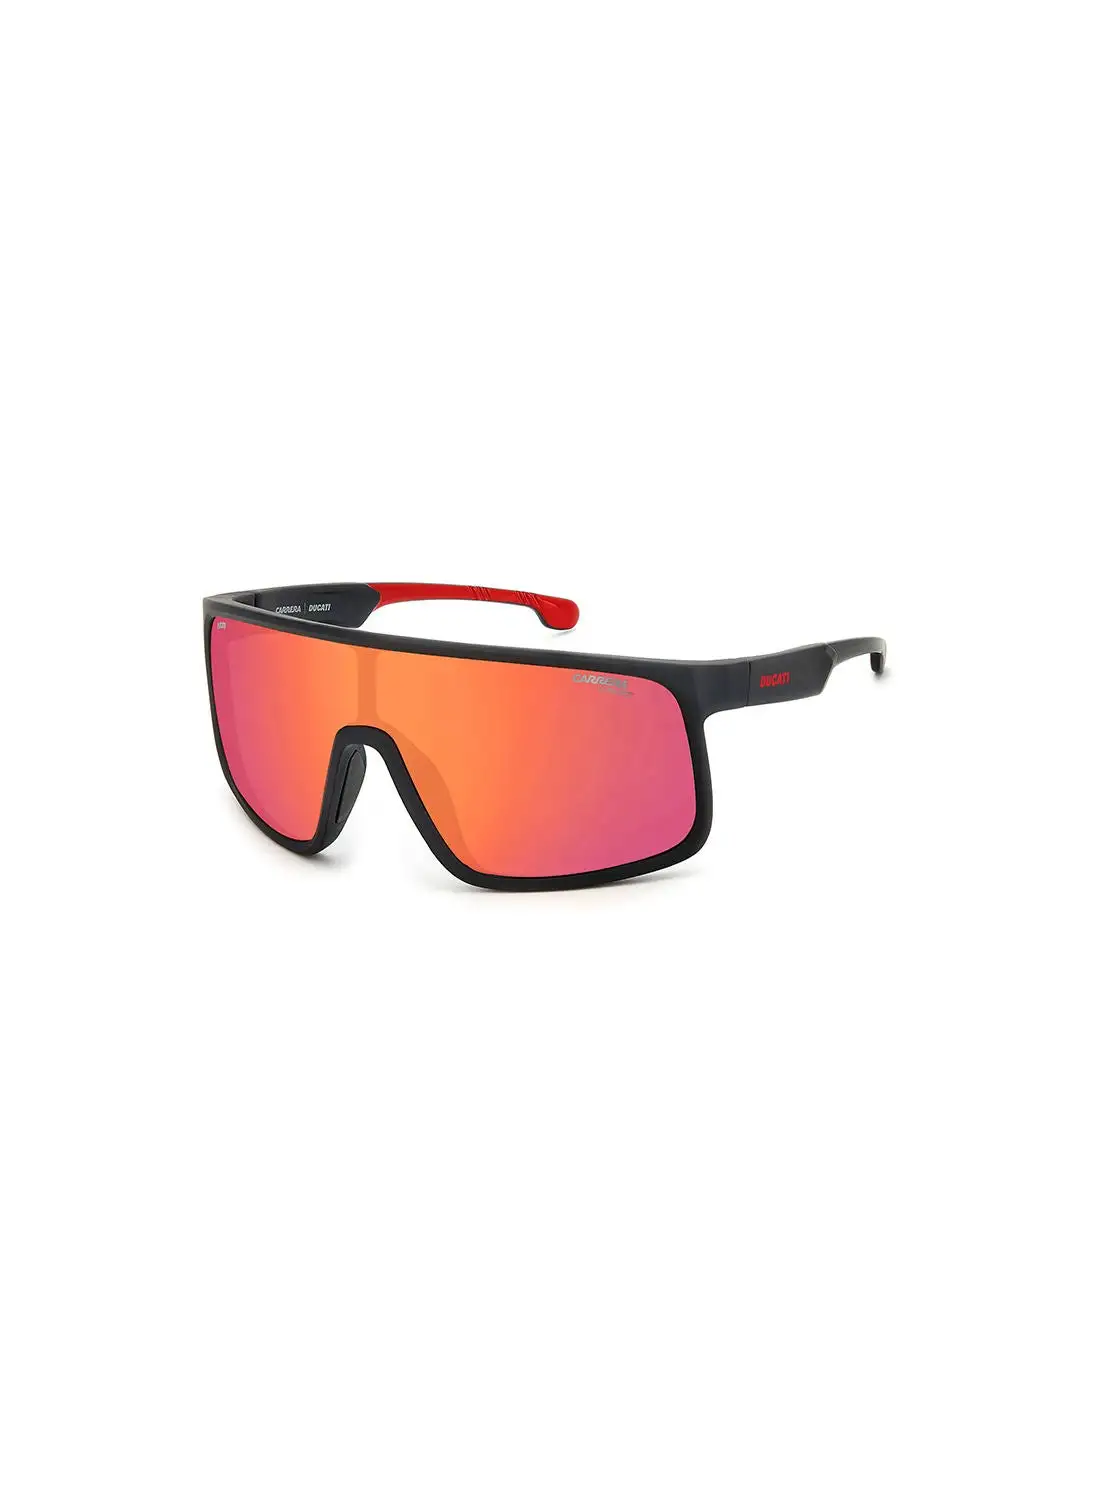 Carrera Men's UV Protection Sunglasses - Carduc 017/S Black Red 99 - Lens Size: 99 Mm